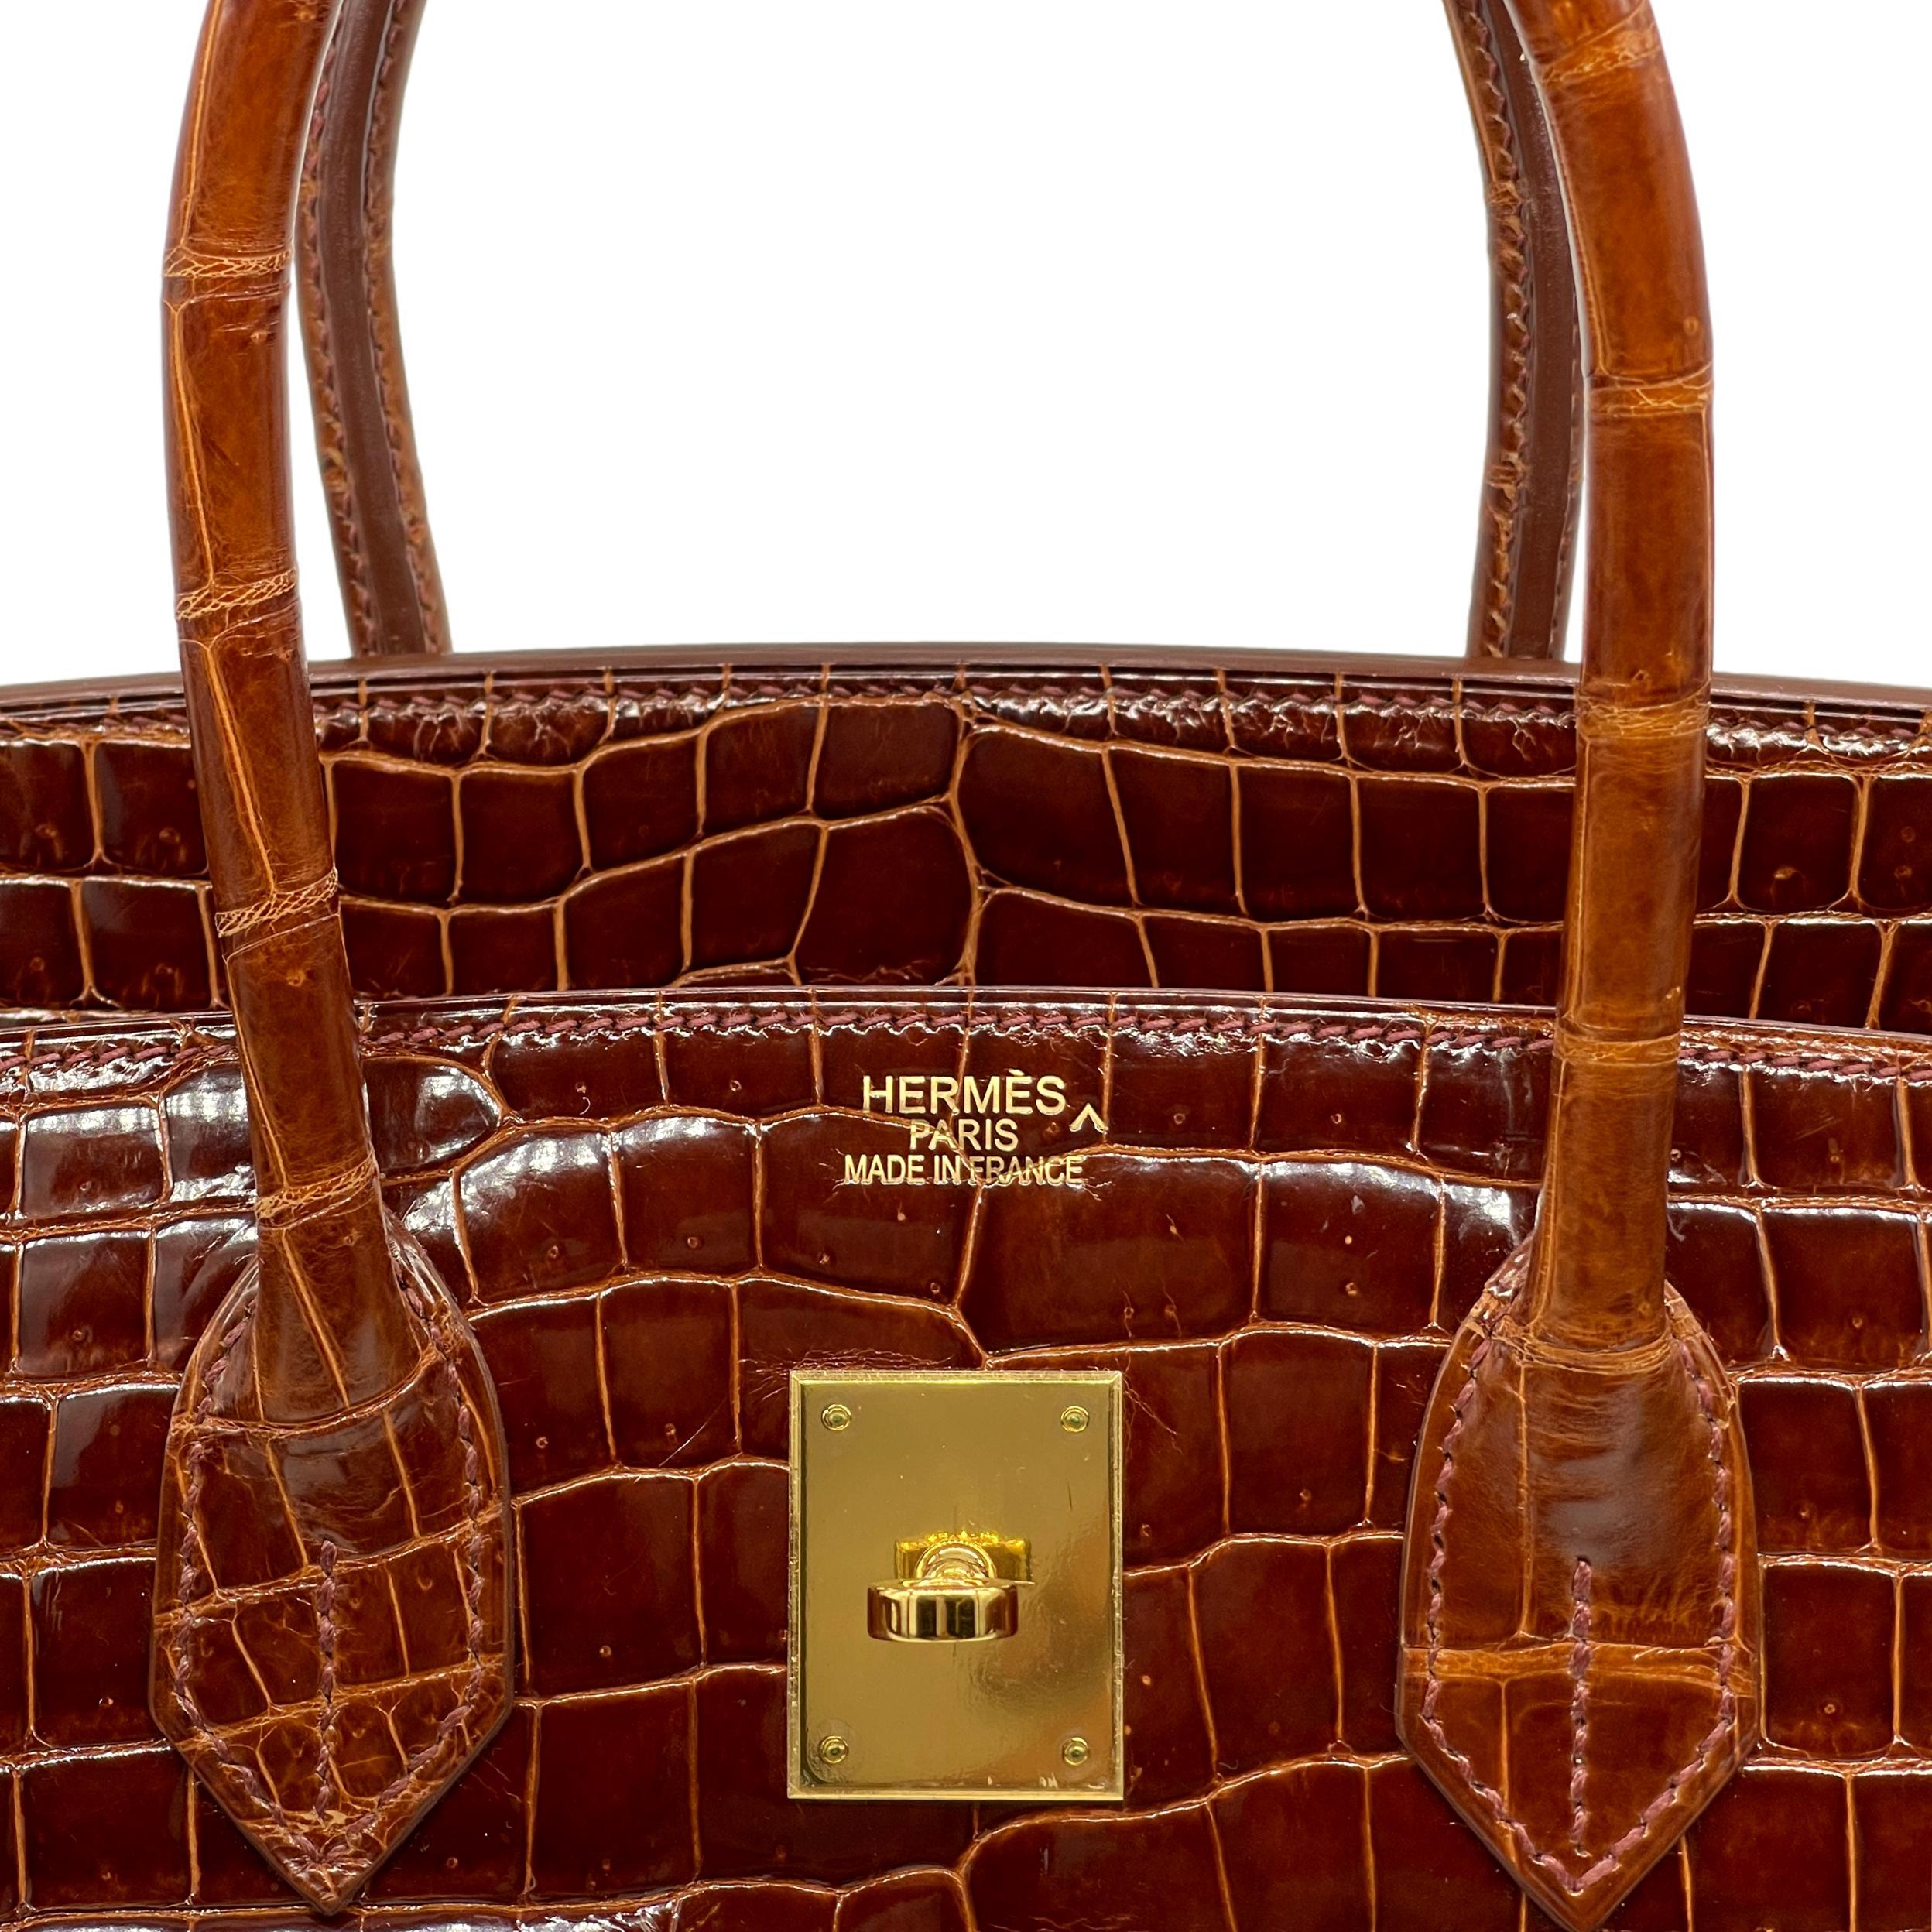 Hermès Shiny Miel Porosus Crocodile 35cm Birkin Bag with Gold Hardware, 2008. 5